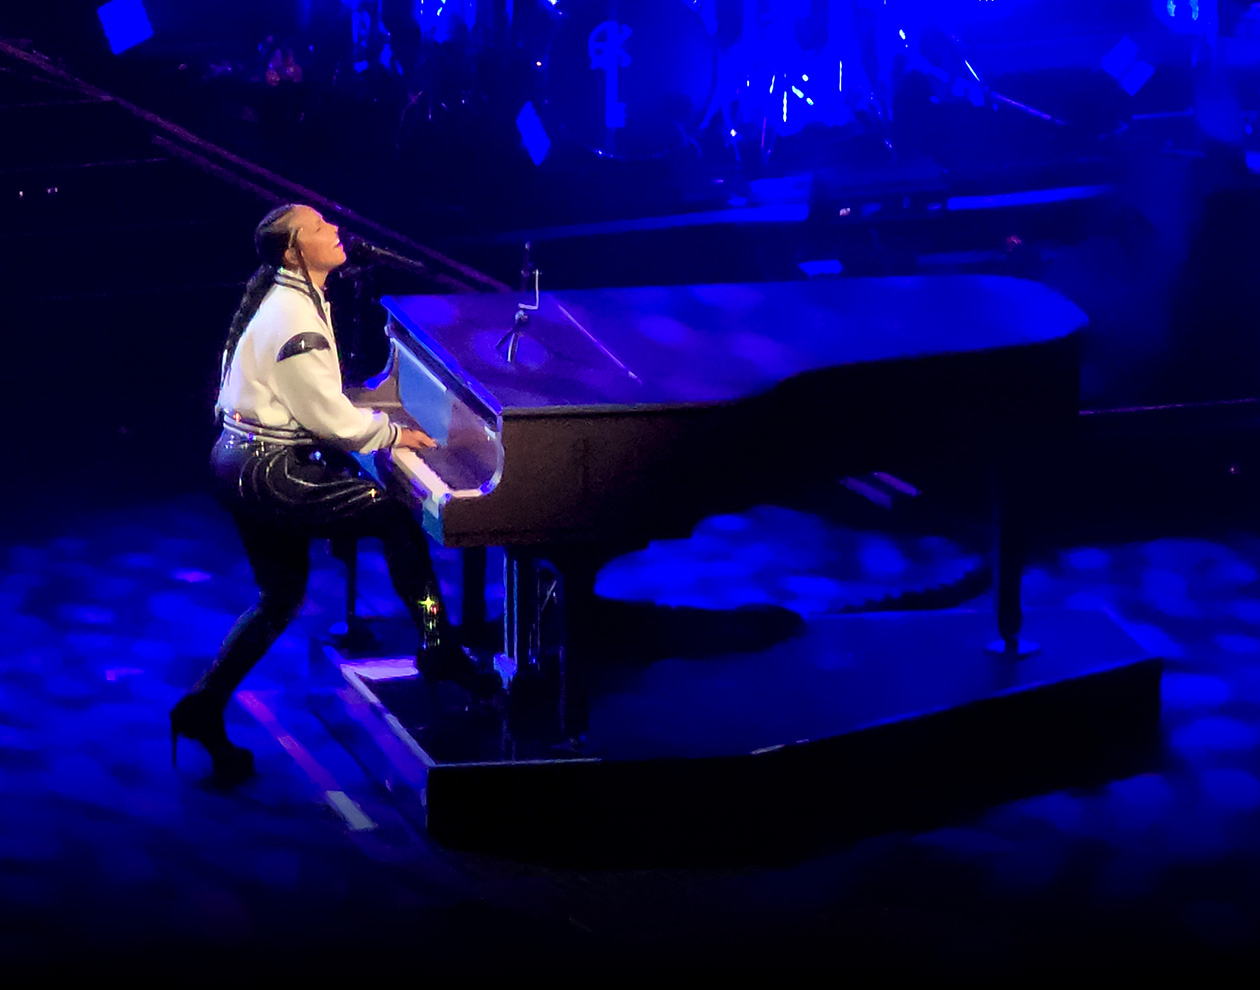 Alicia Keys : Alicia + Keys World Tour - Radio City Music Hall, New York (2022)